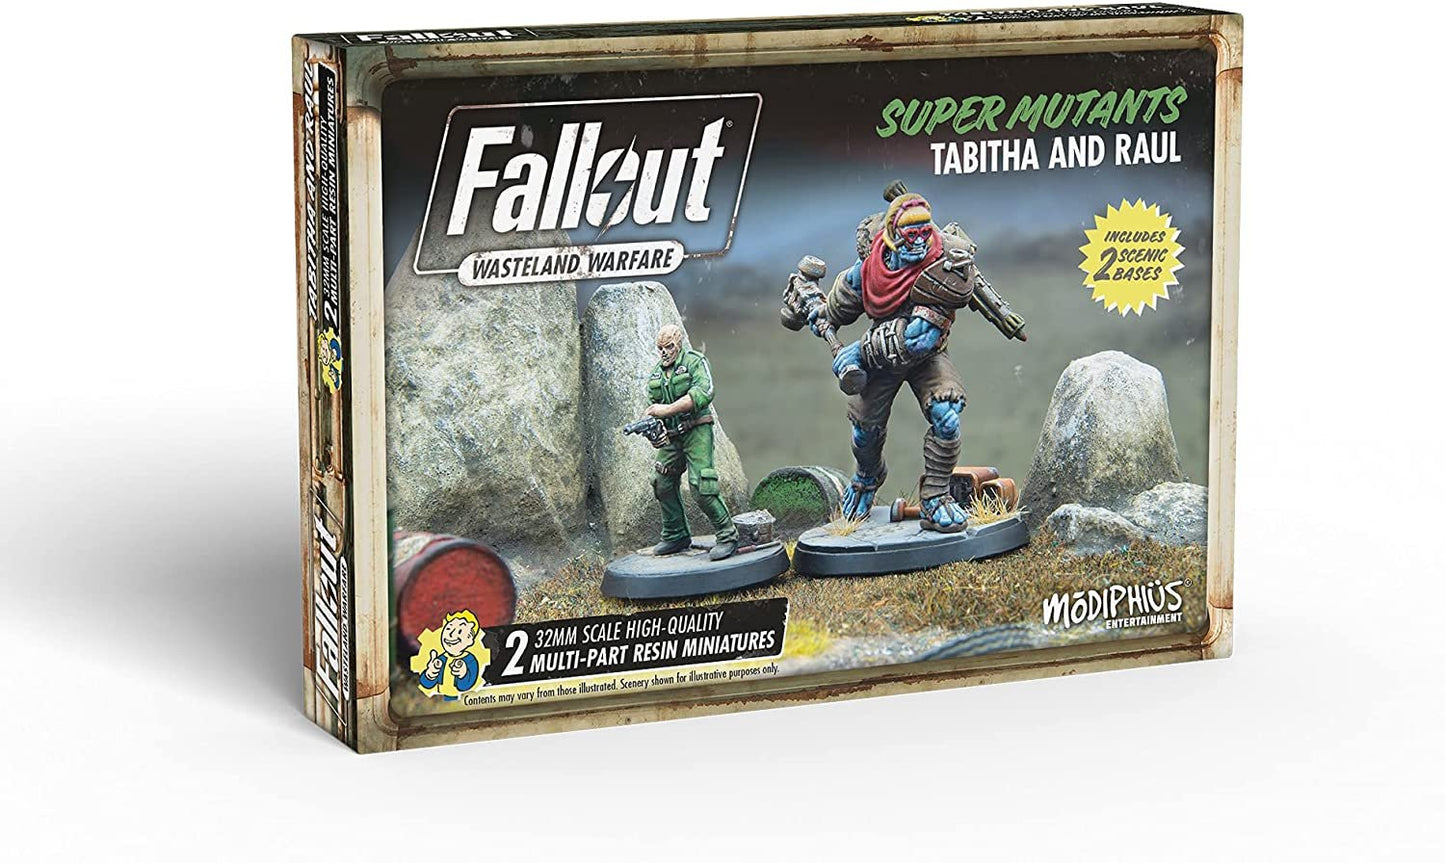 Fallout Wasteland Warfare: Super Mutants Tabitha and Raul